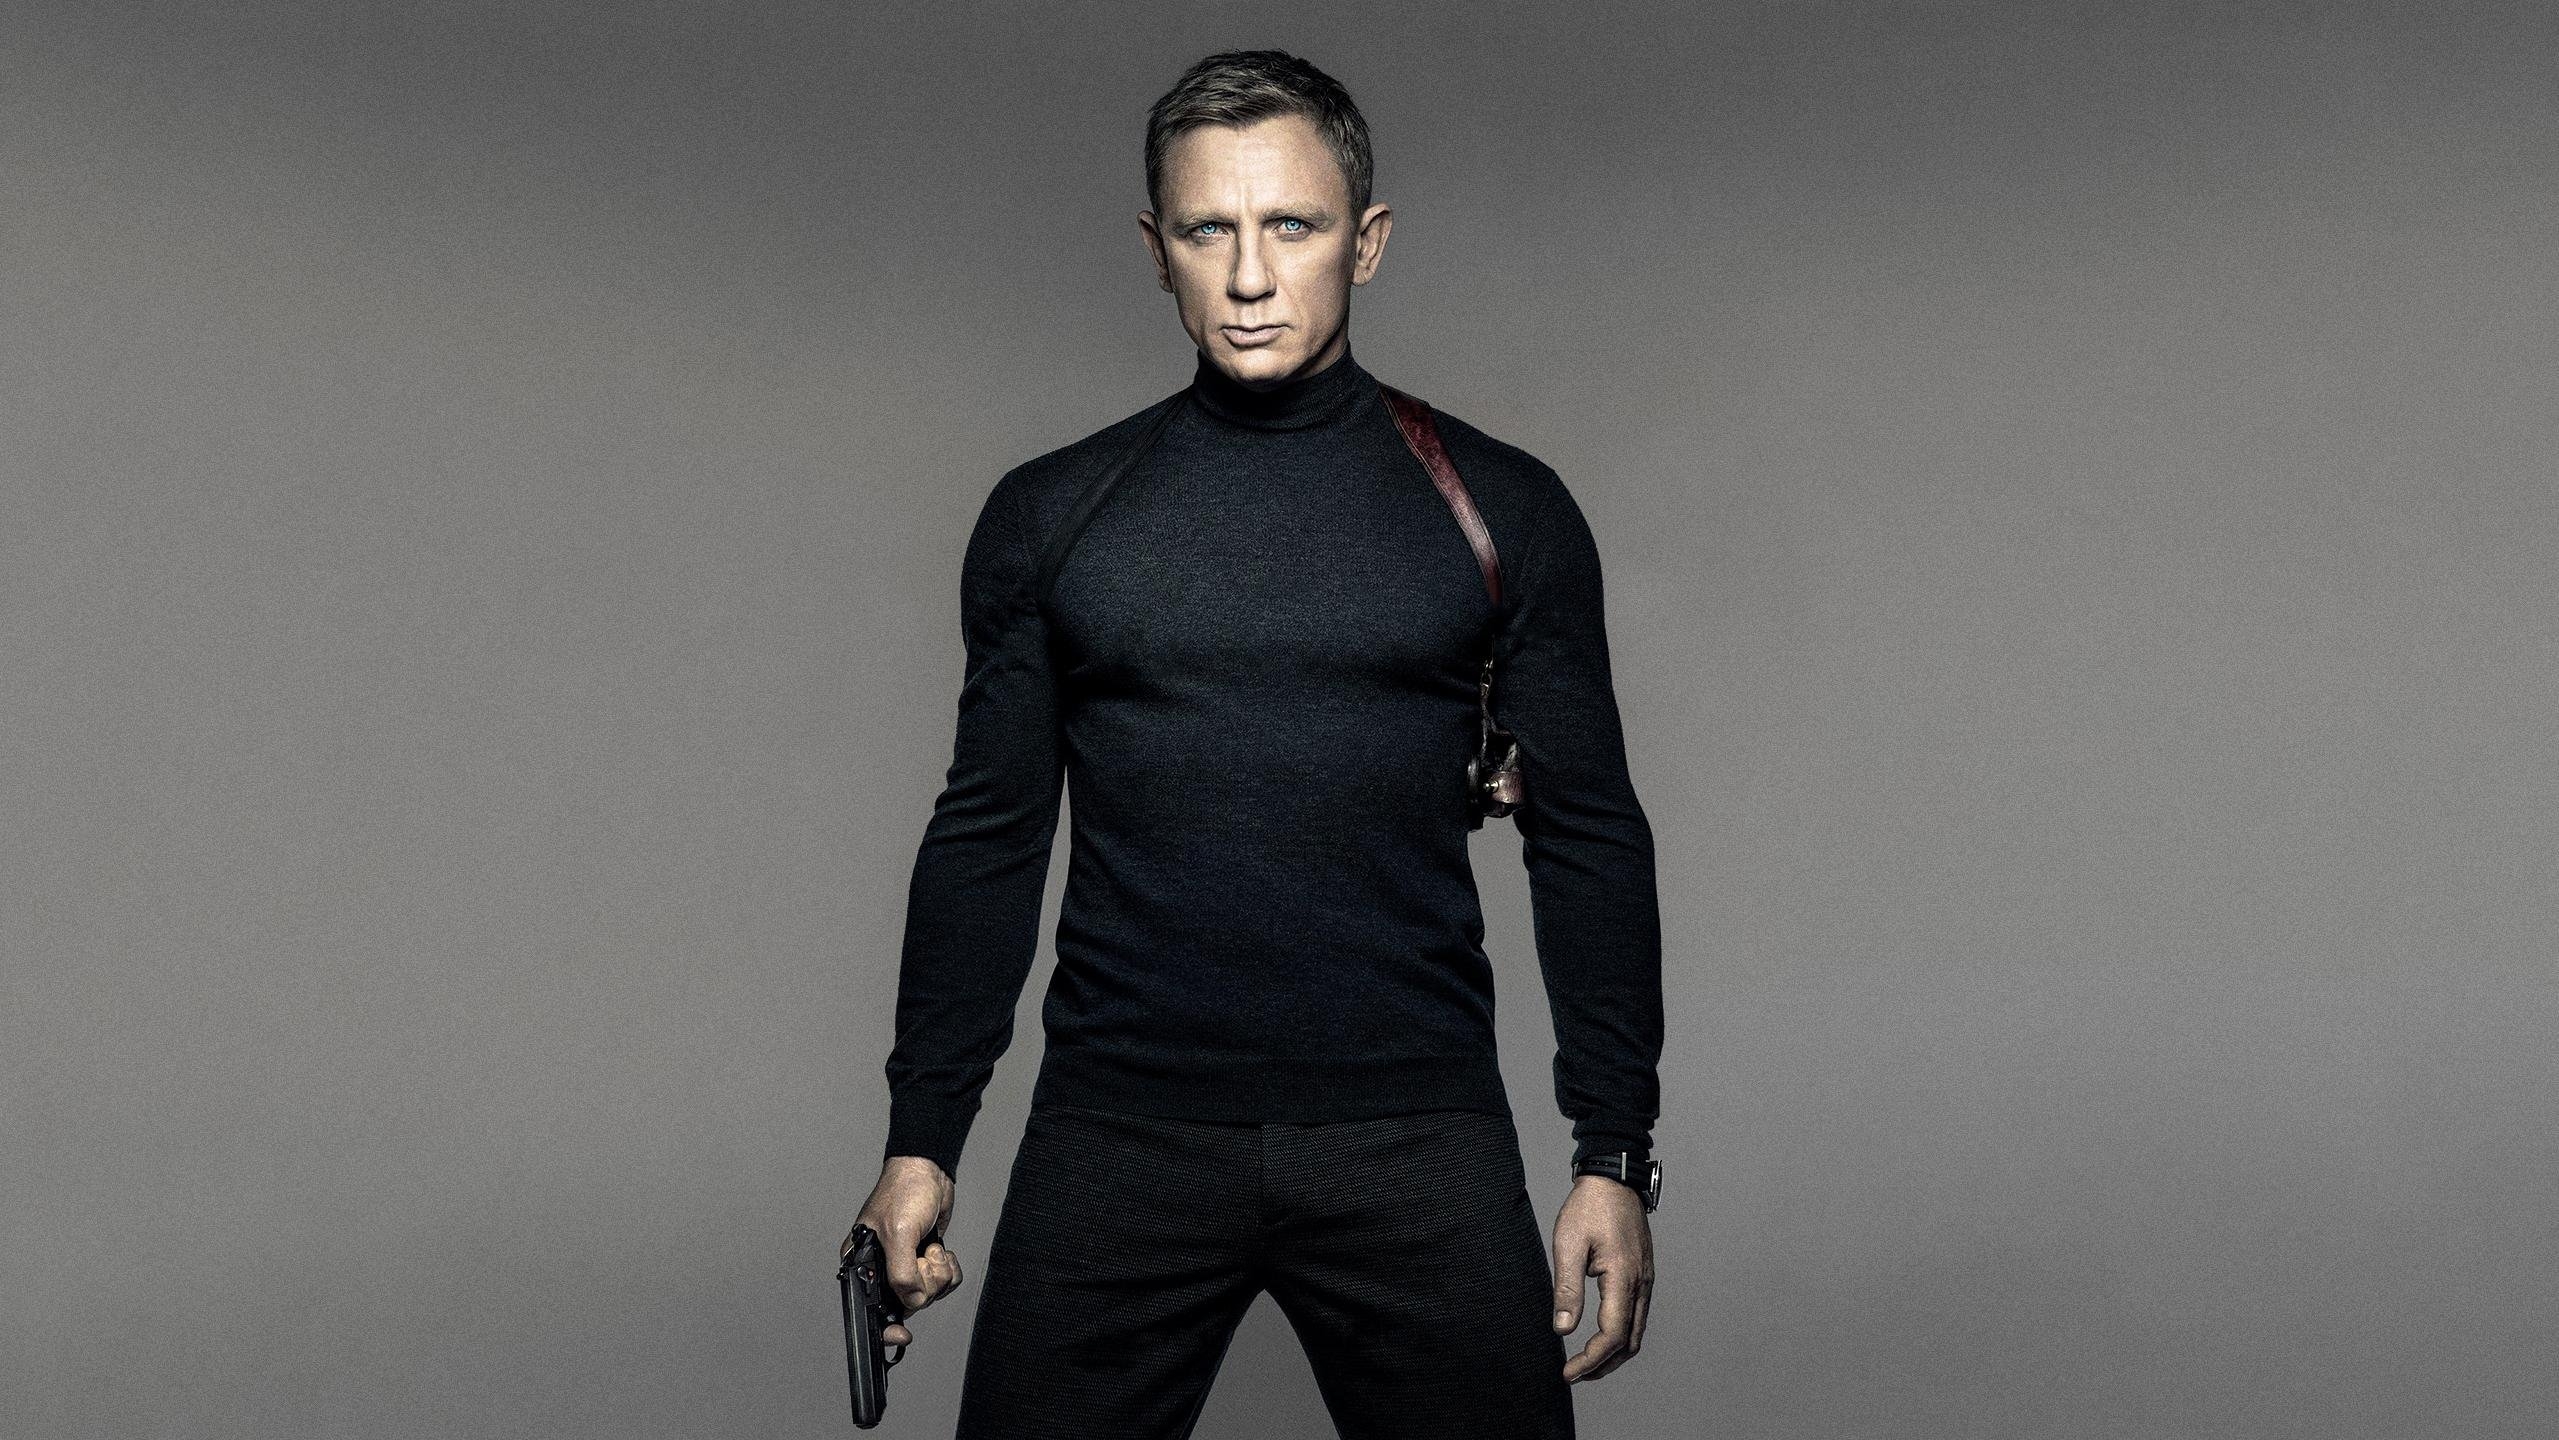 Daniel Craig James Bond Simple Background Movies Gun Men Actor Standing Gray Background 2559x1440